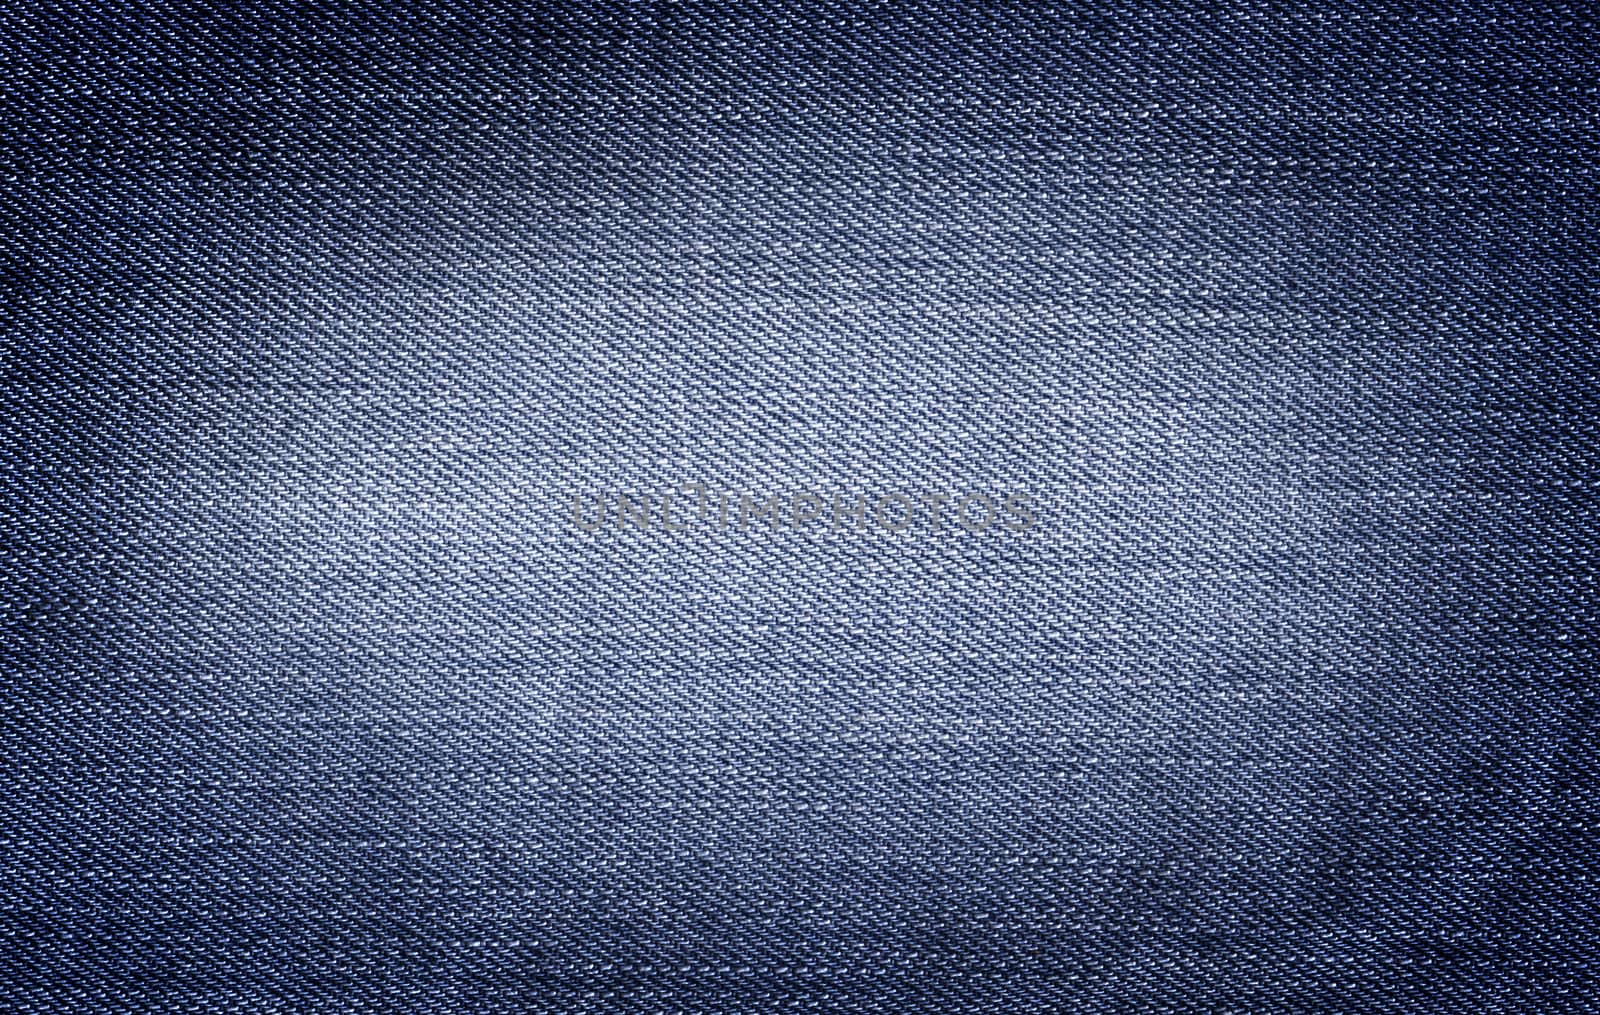 Jean Texture by selensergen